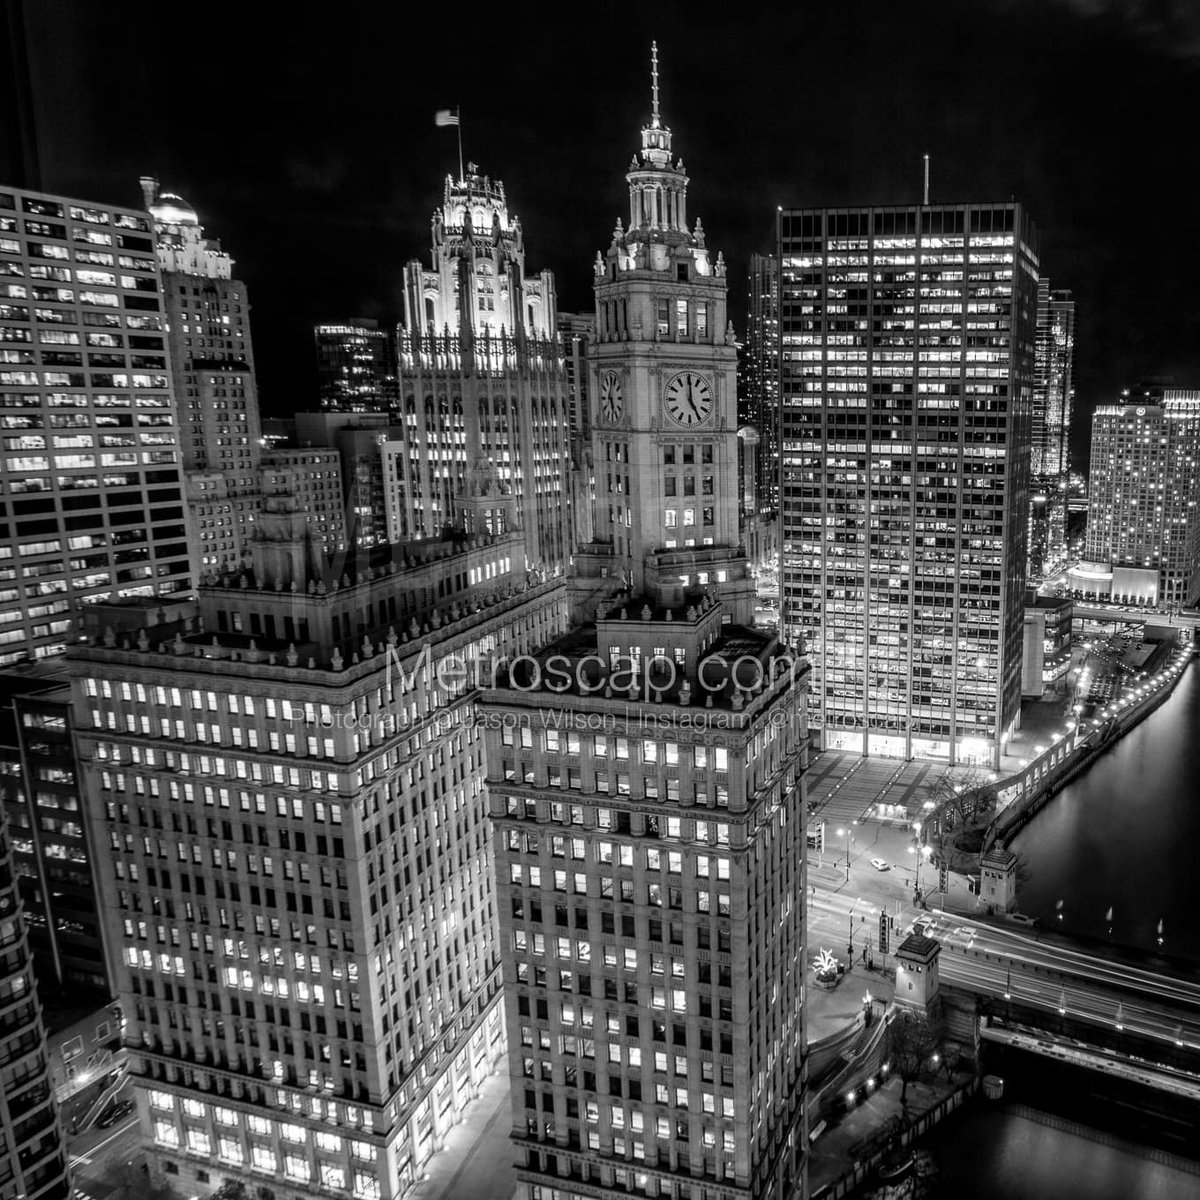 Chicago wall-art Black & White: The Wrigley Building and Tribune Building from Trump Tower #chicago #windycity #chitown #lakeMichigan #navyPier #312 #BlackWhite | https://t.co/BKUvgJ2kKp https://t.co/AvuthnO1Yl